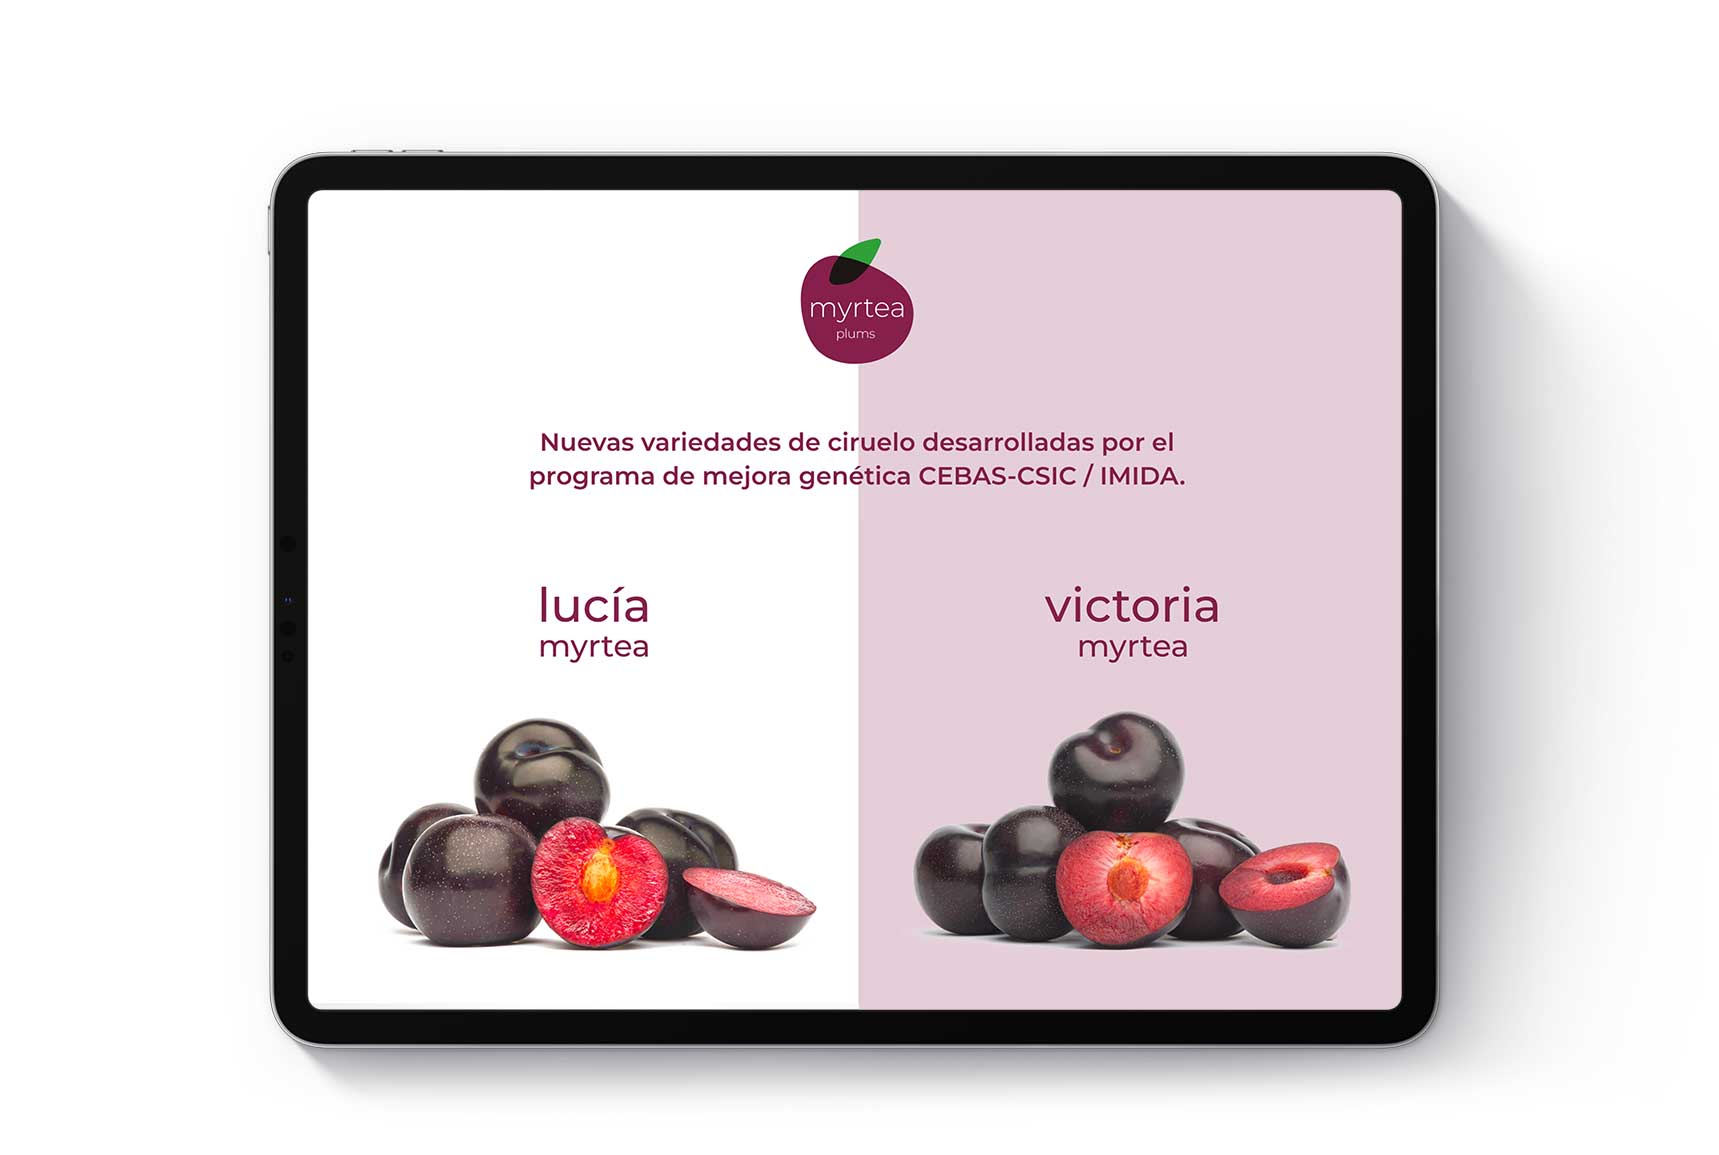 branding para Myrtea plums